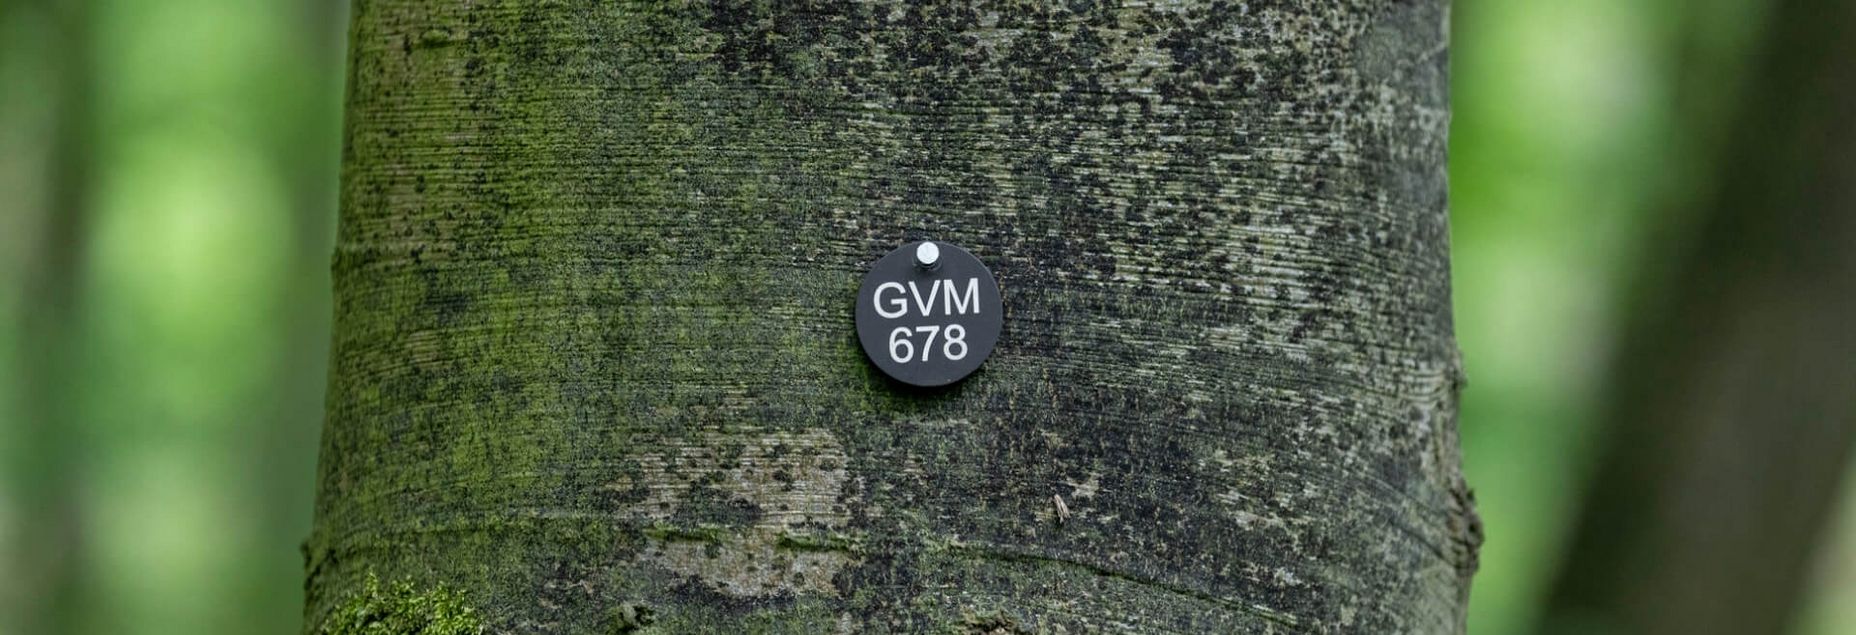 Baum GVM 678 - Plakette